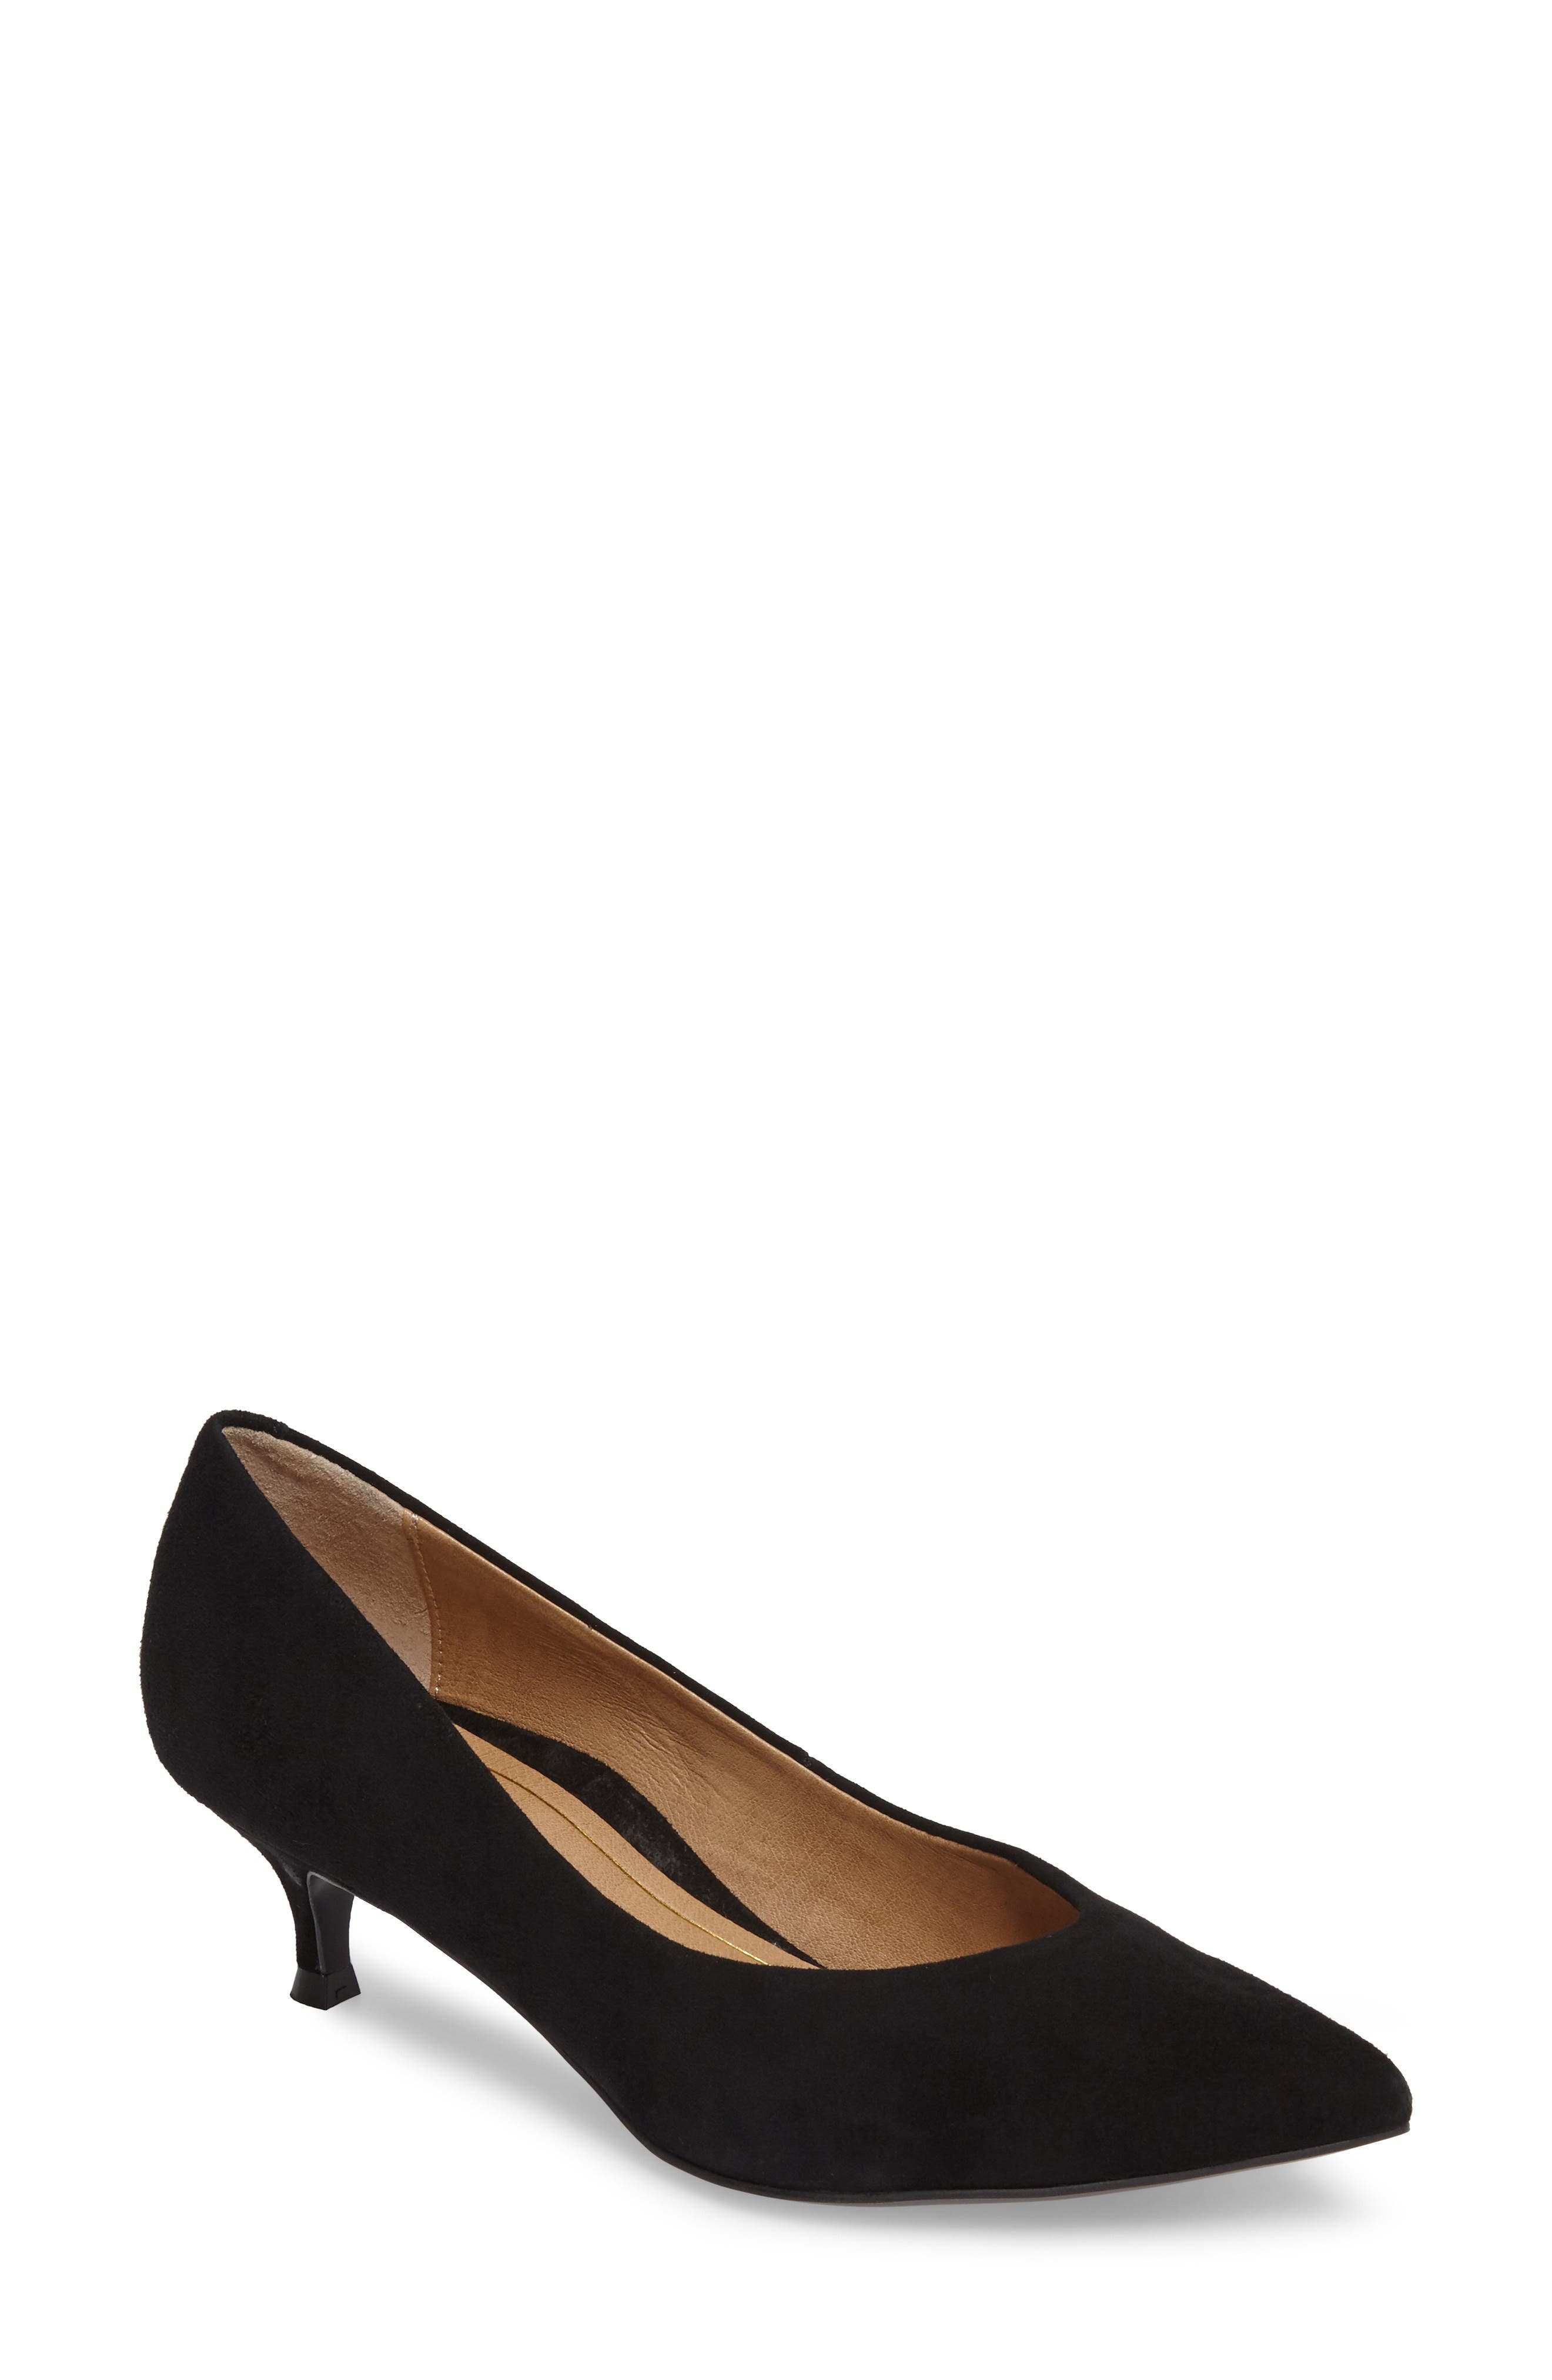 vionic black heels